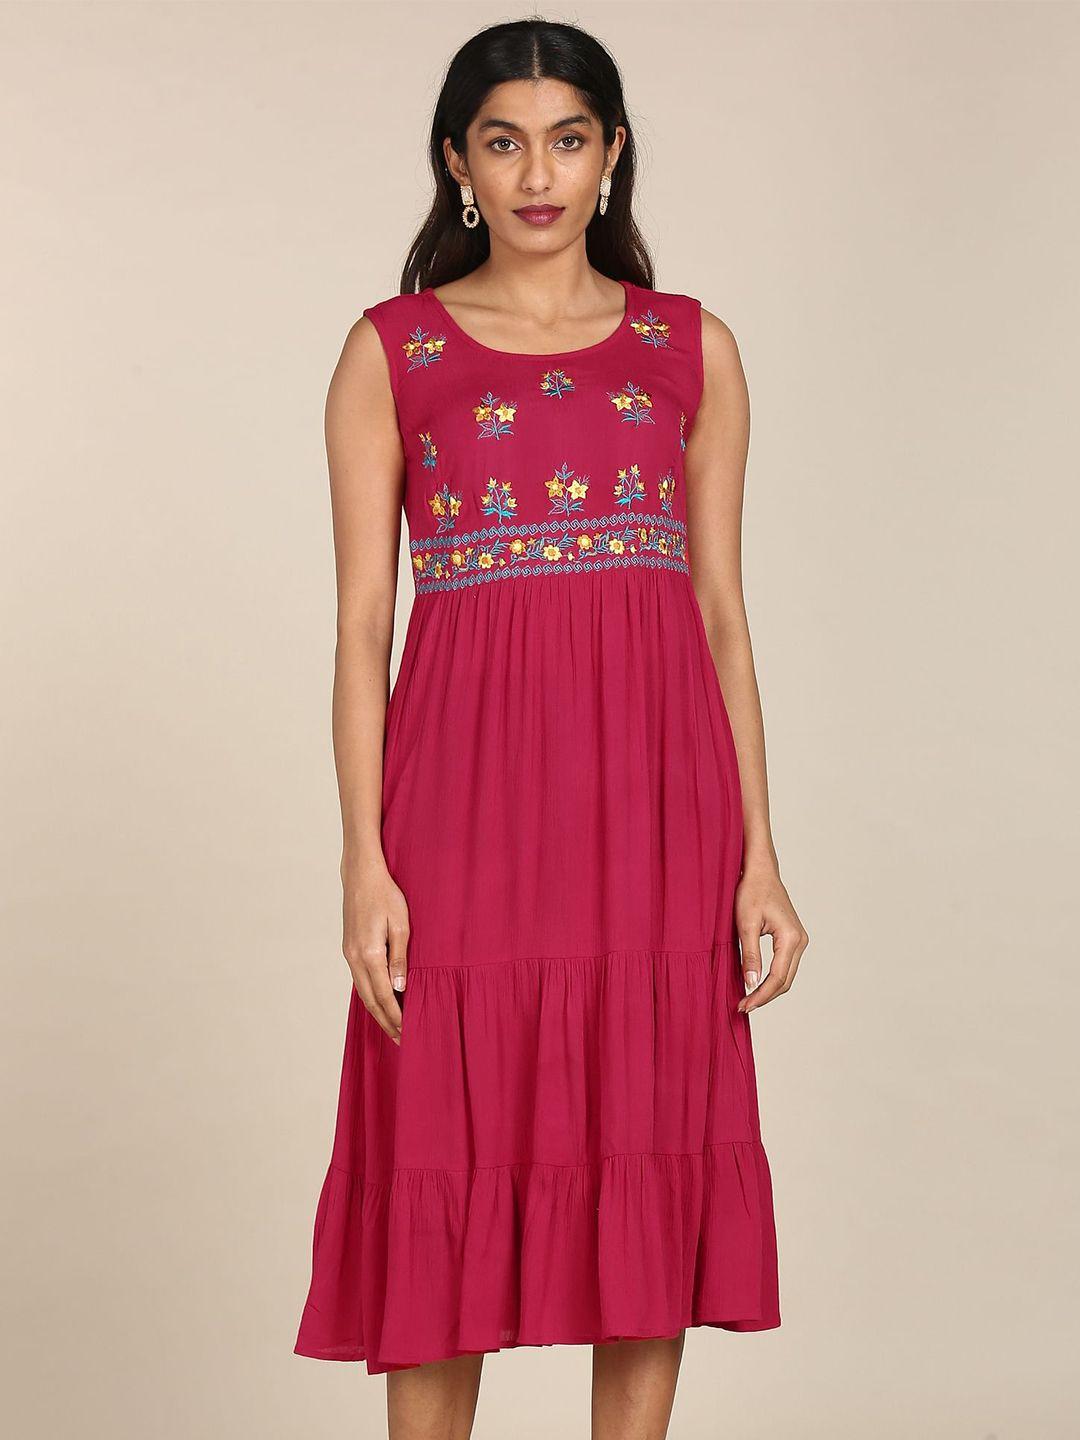 karigari pink ethnic motifs embroidered ethnic a-line midi dress